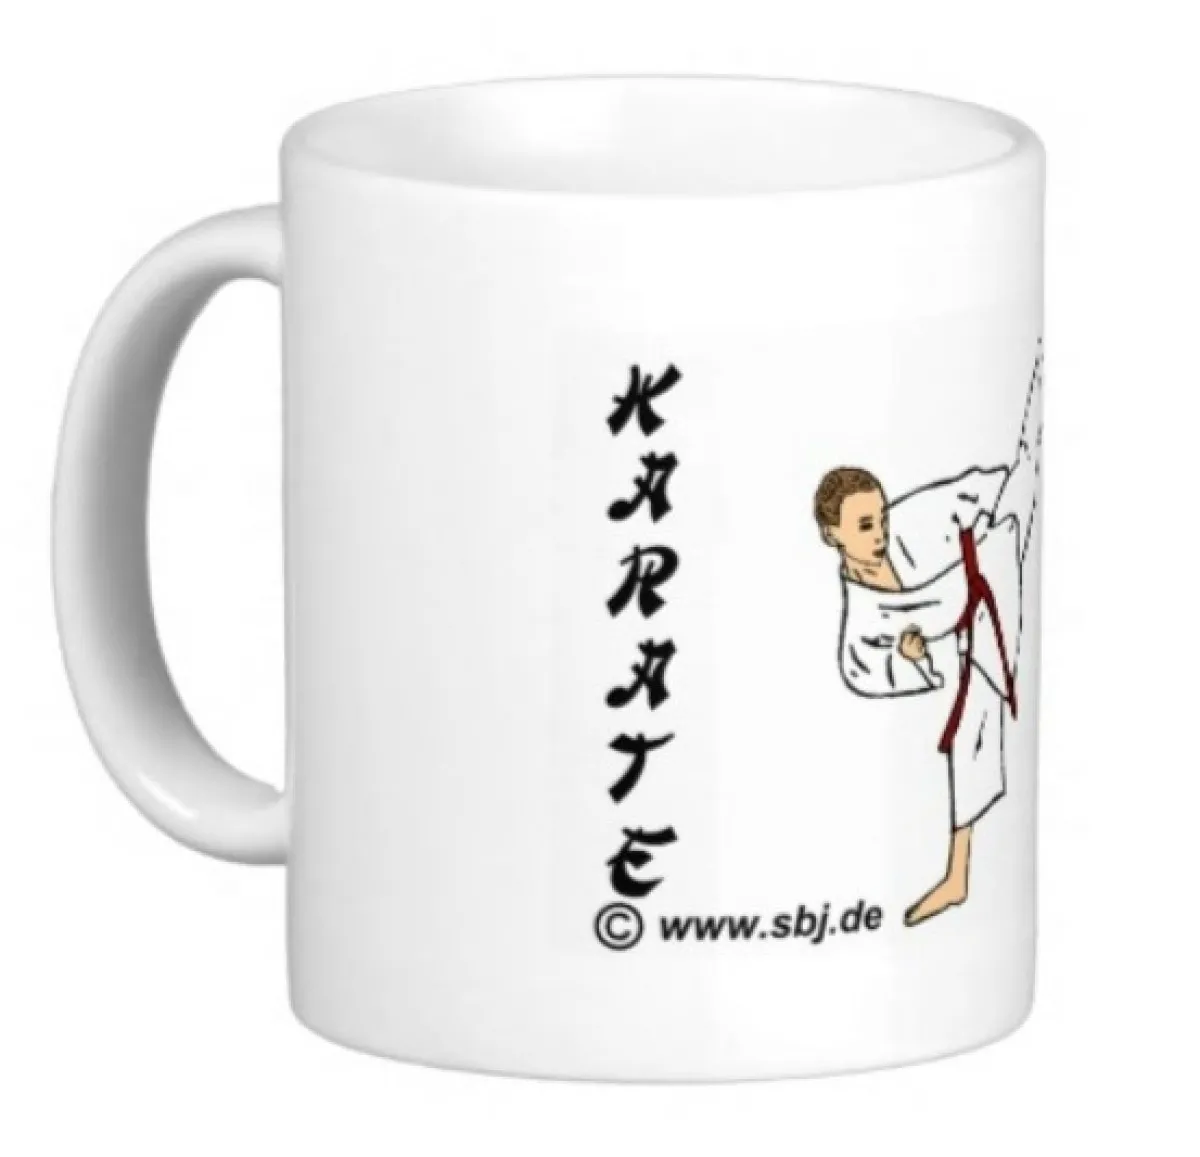 Mug white printed with karate figure